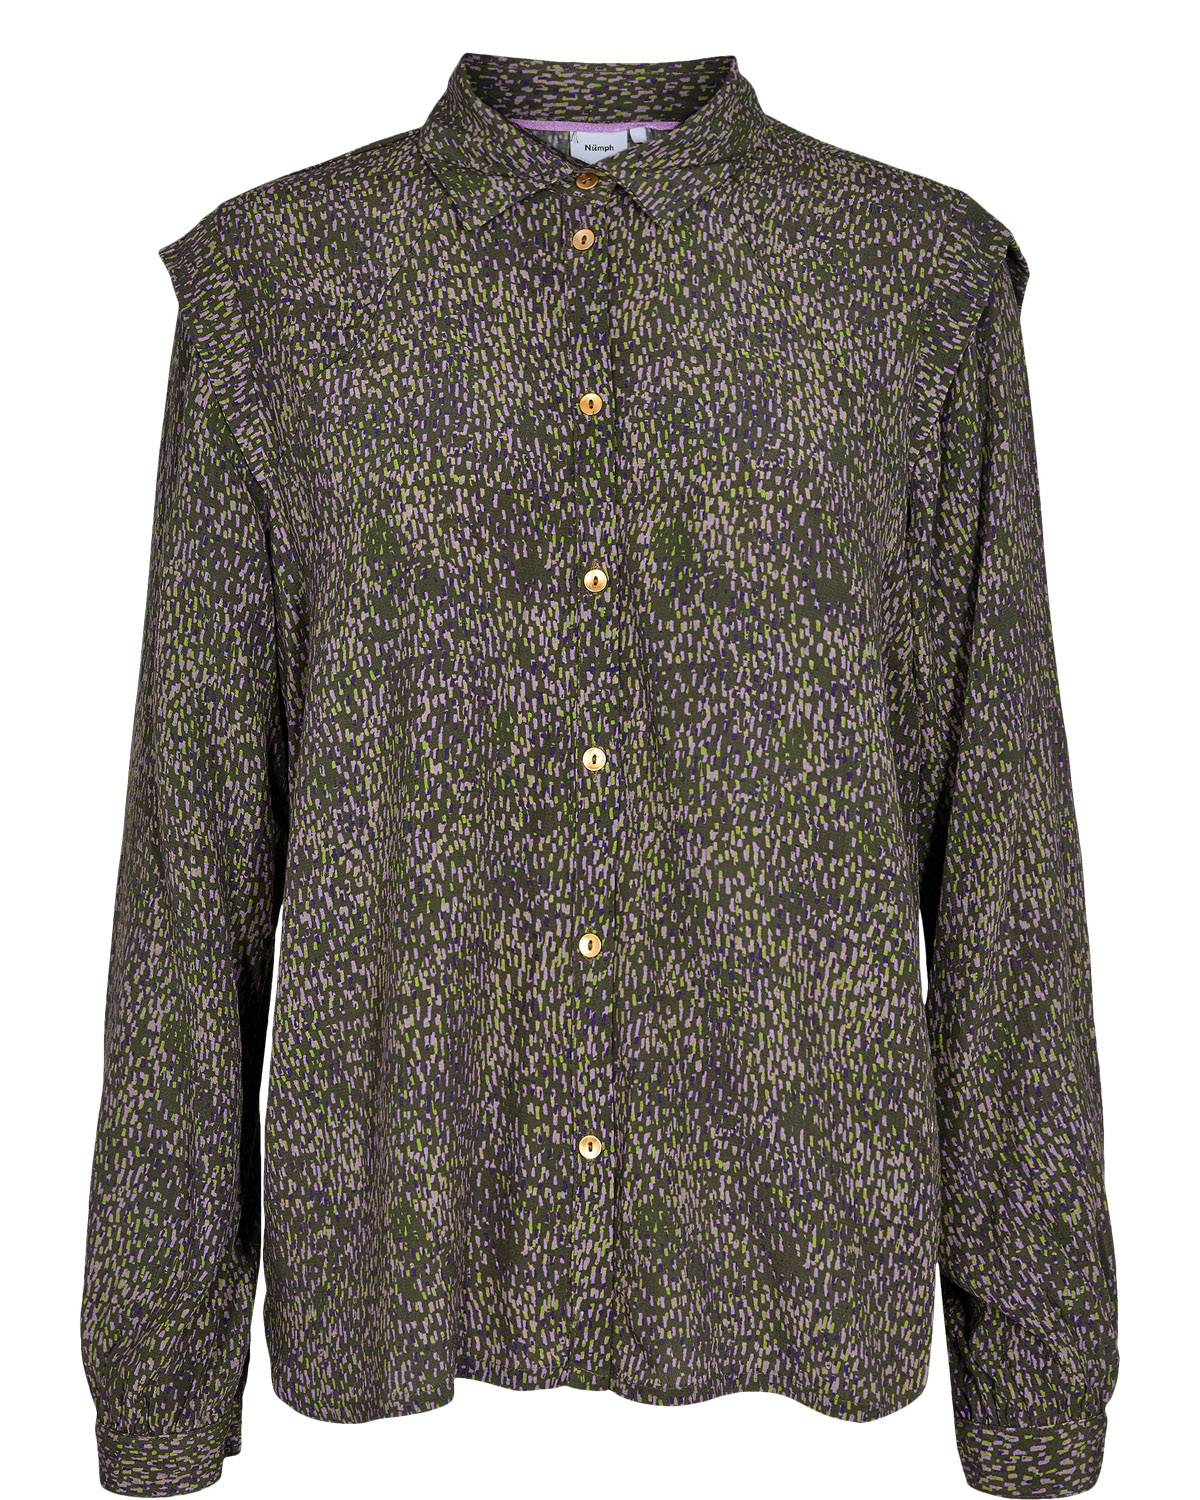 Nümph Azelia Shirt, mønstret skjorte grønn/lilla